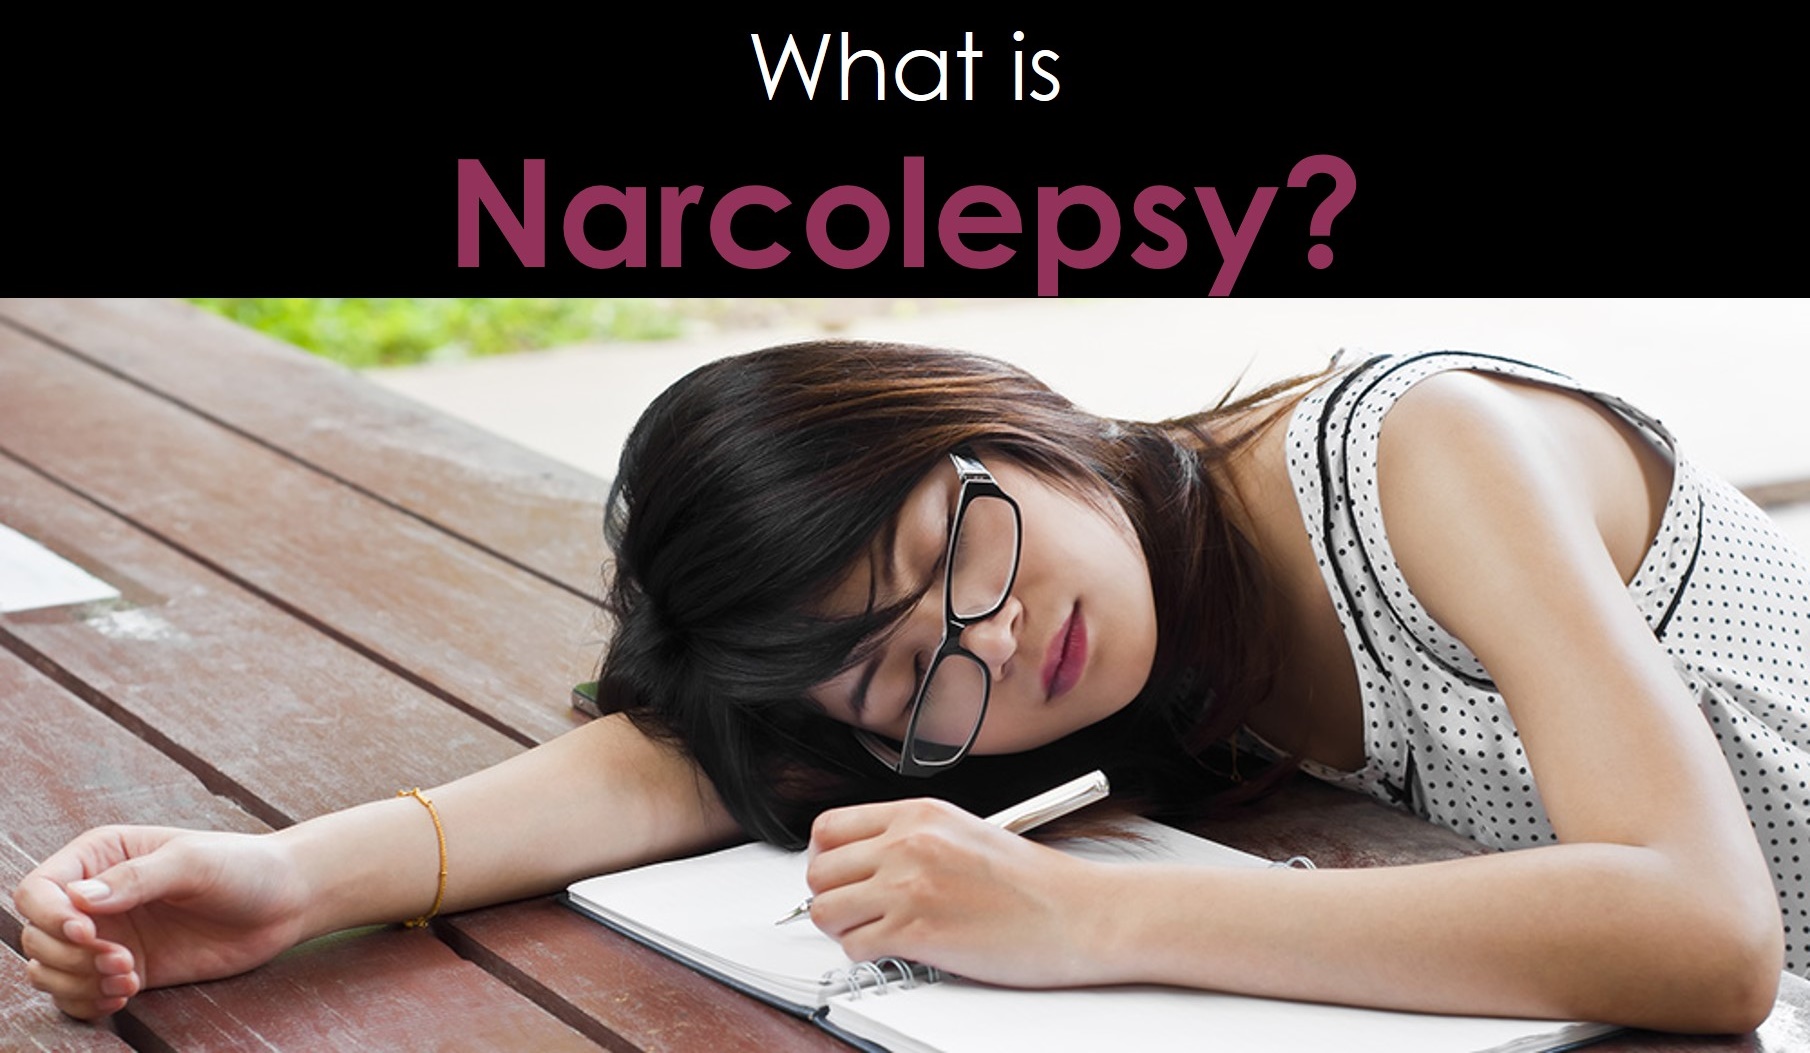 NarcolepsyMain